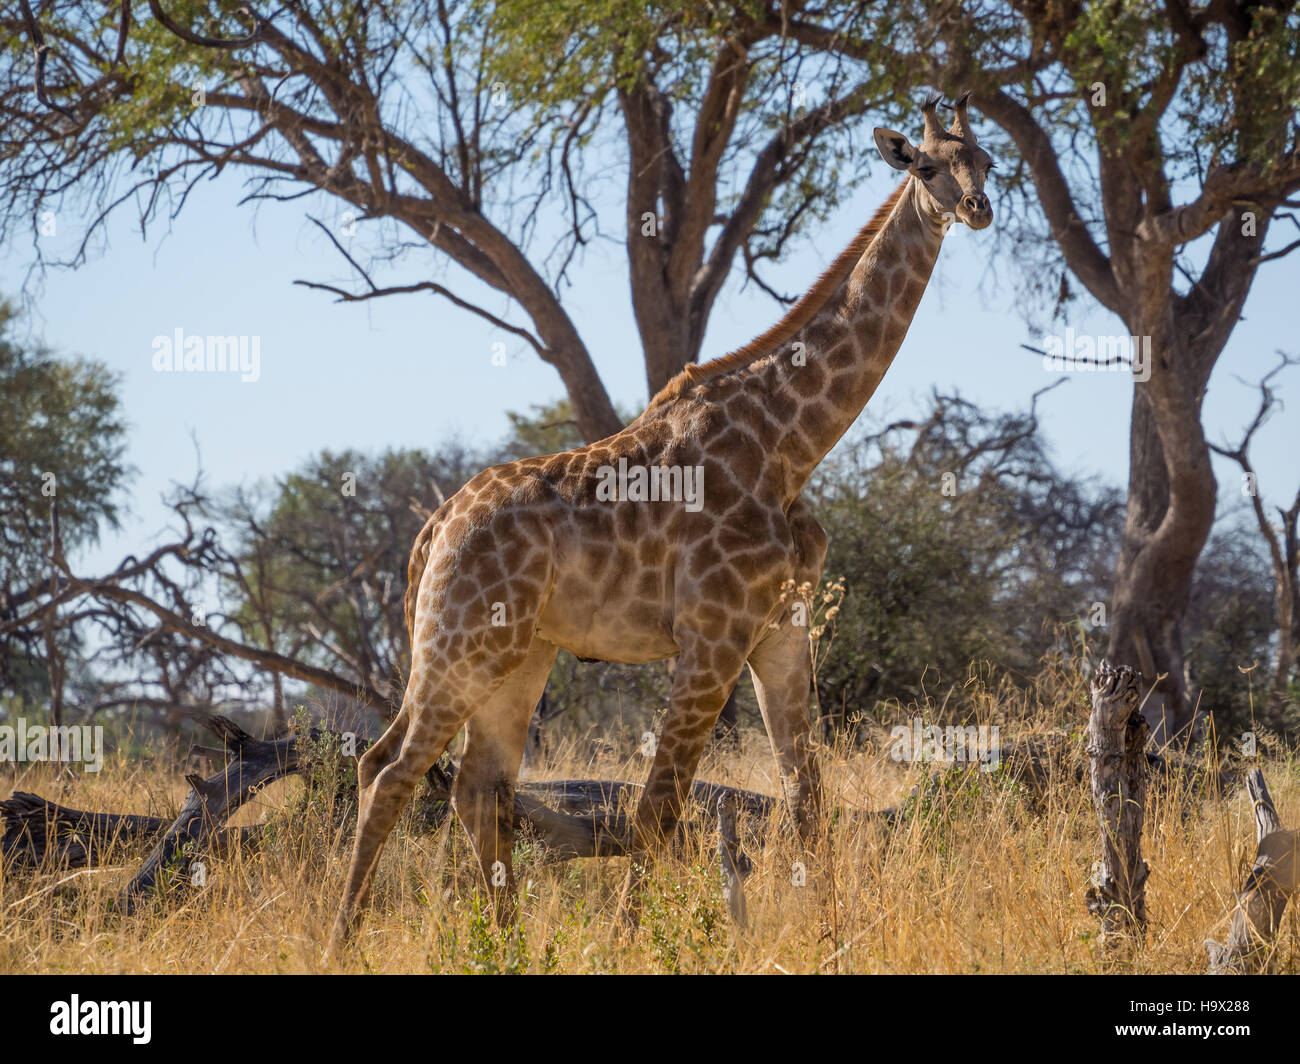 Tall adult giraffe striding through savannah environment with trees in background, safari in Moremi NP, Botswana Stock Photo